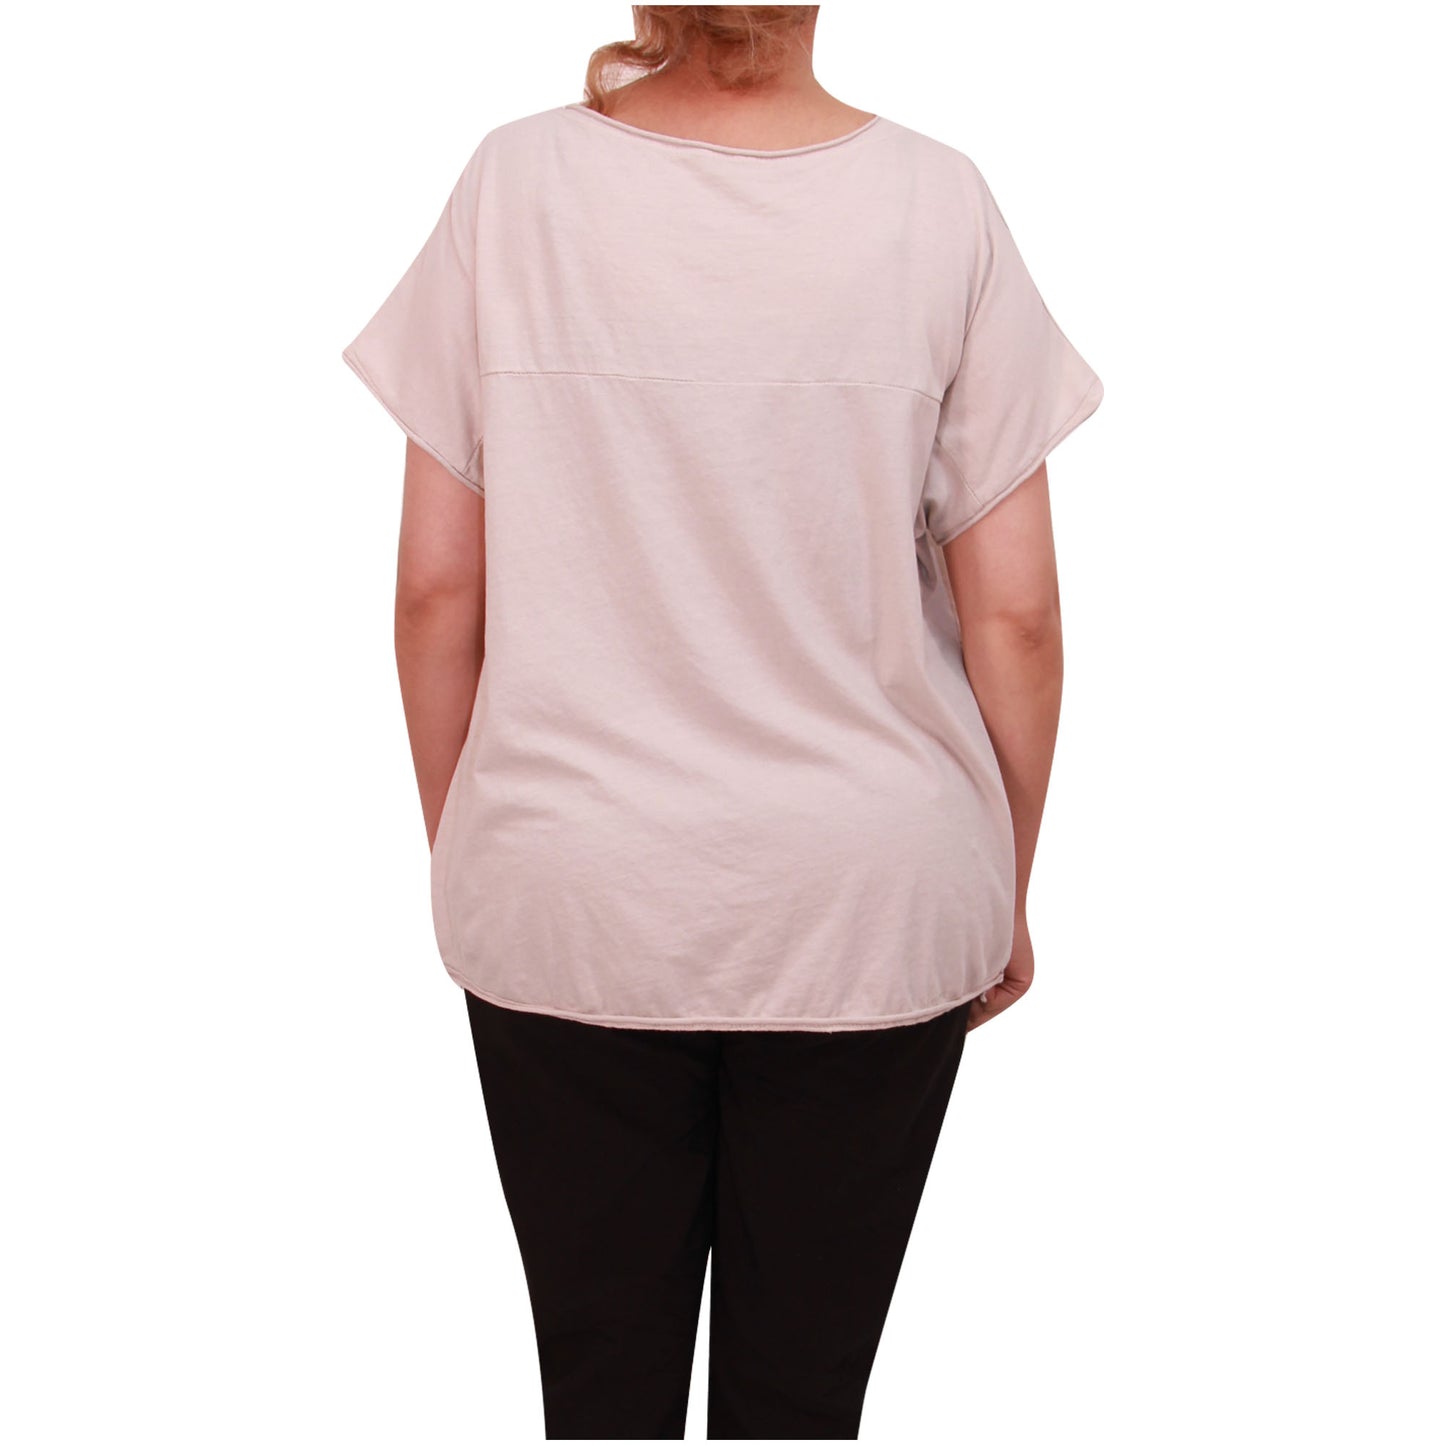 Ladies short sleeve top, women Italian foil printed t shirt girls summer